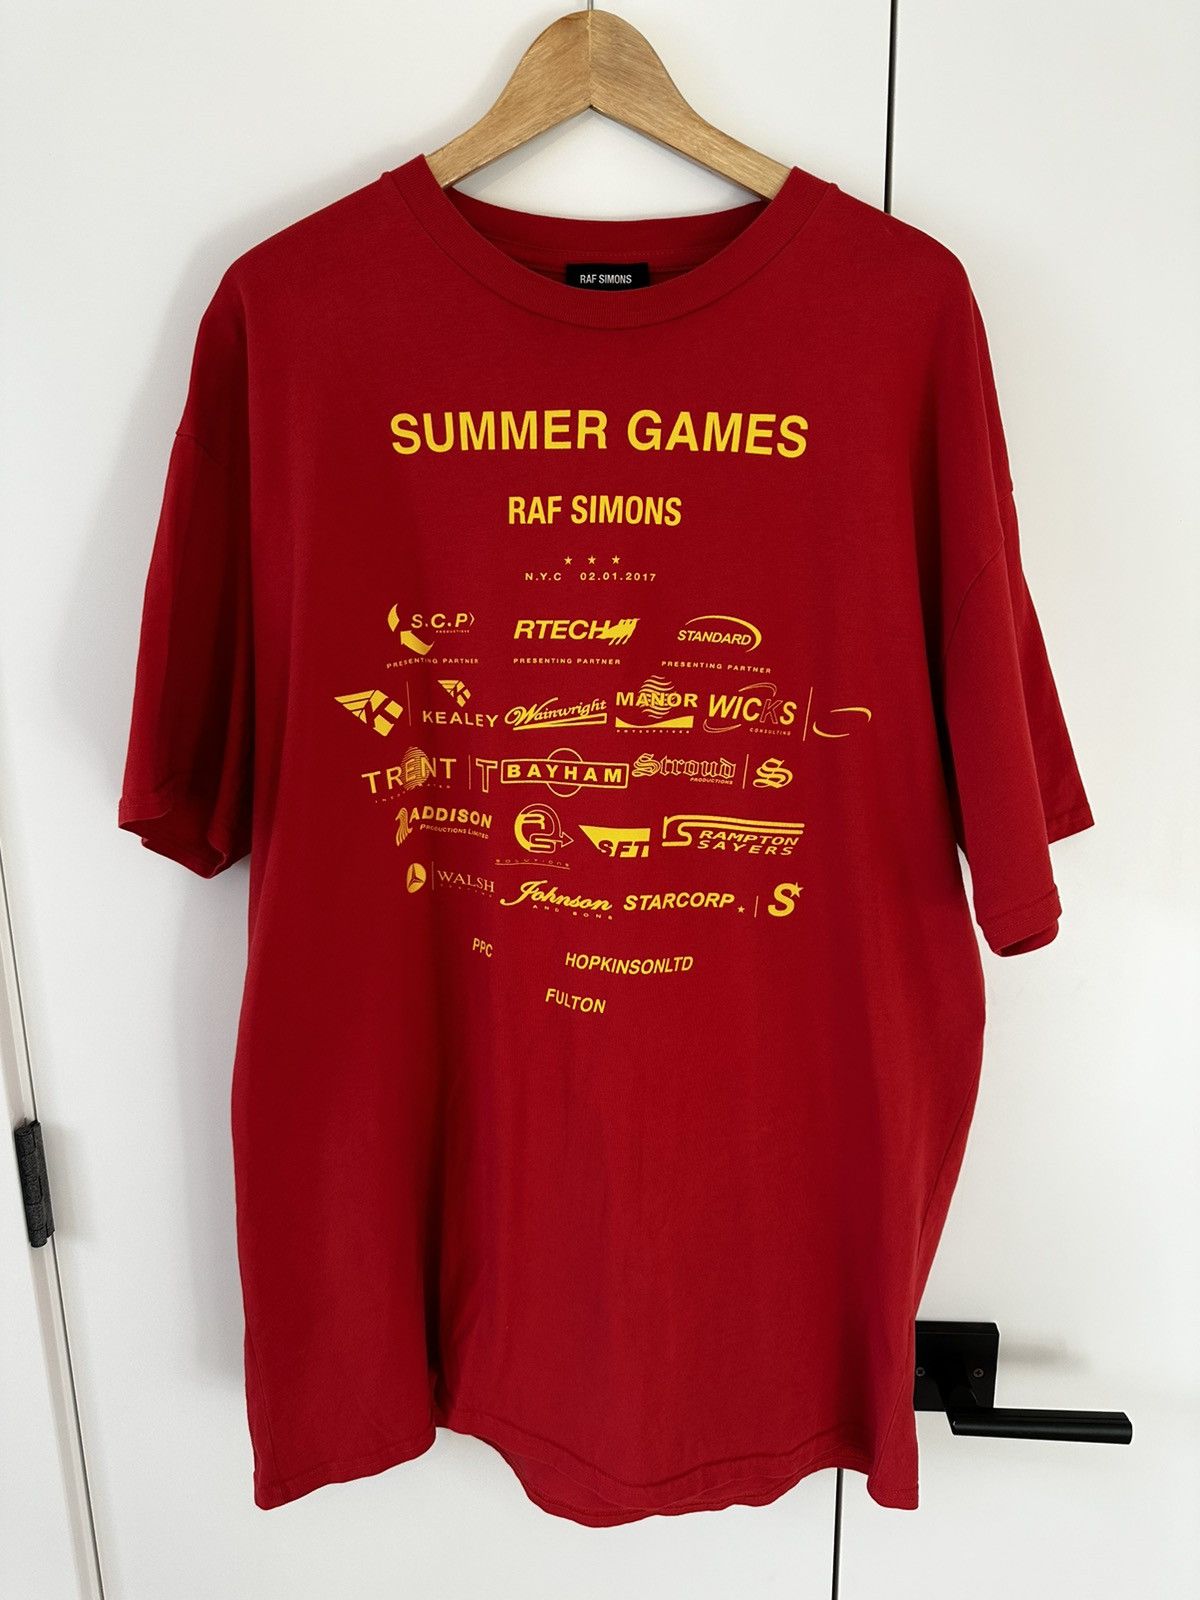 Raf Simons Summer Games Tee | Grailed